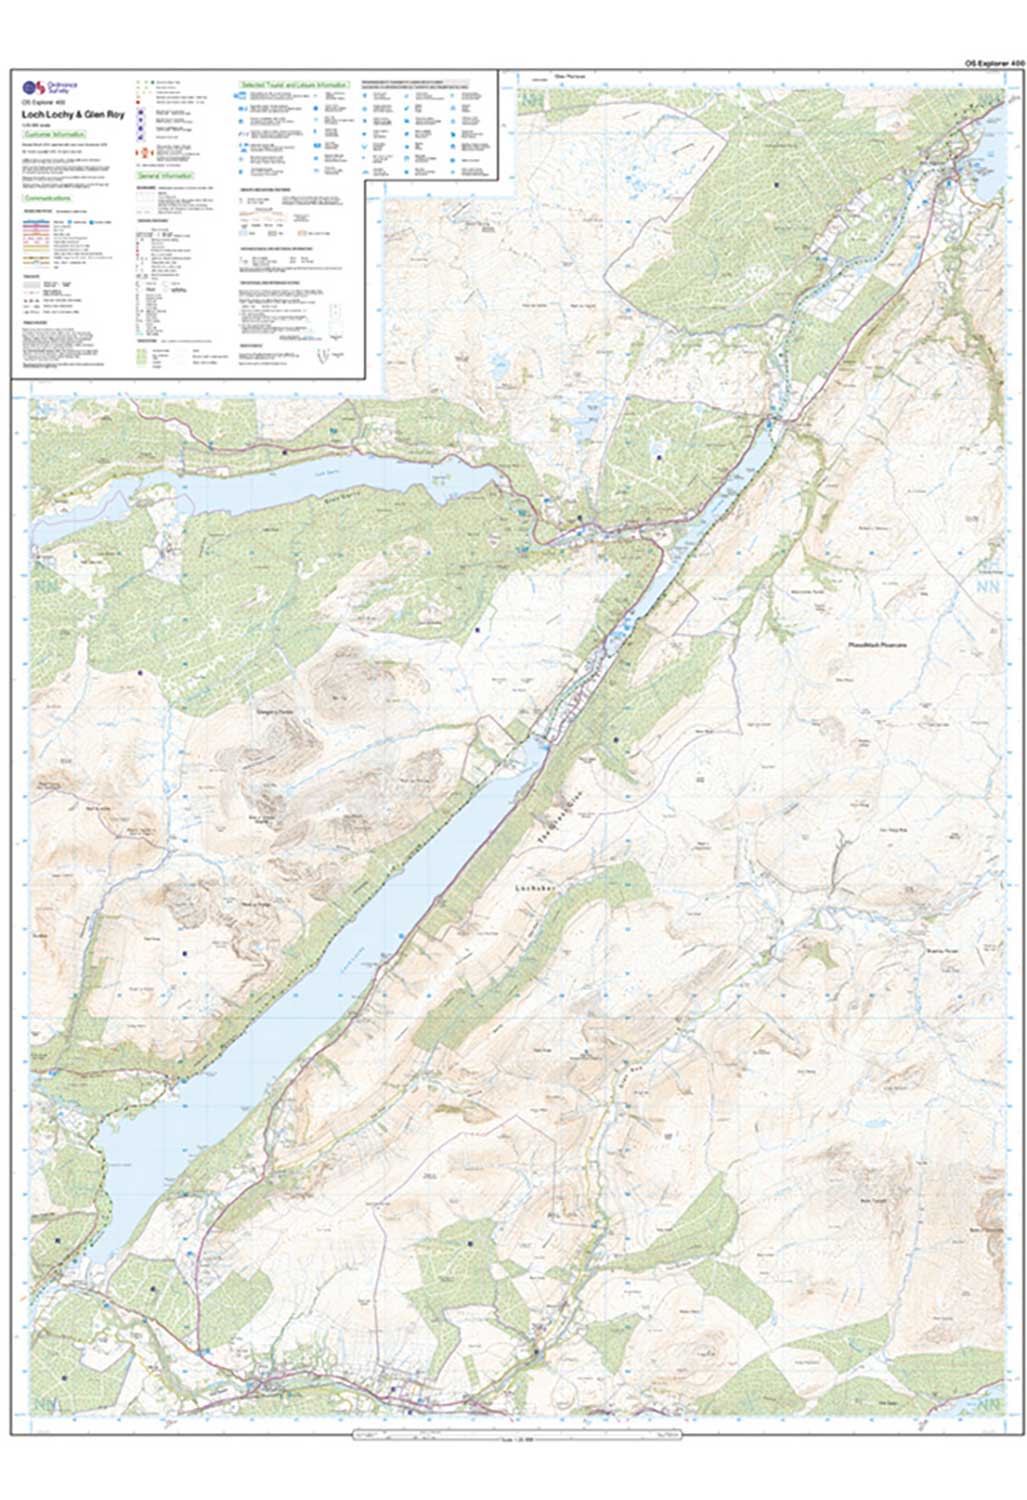 Ordnance Survey Loch Lochy & Glen Roy - OS Explorer 400 Map